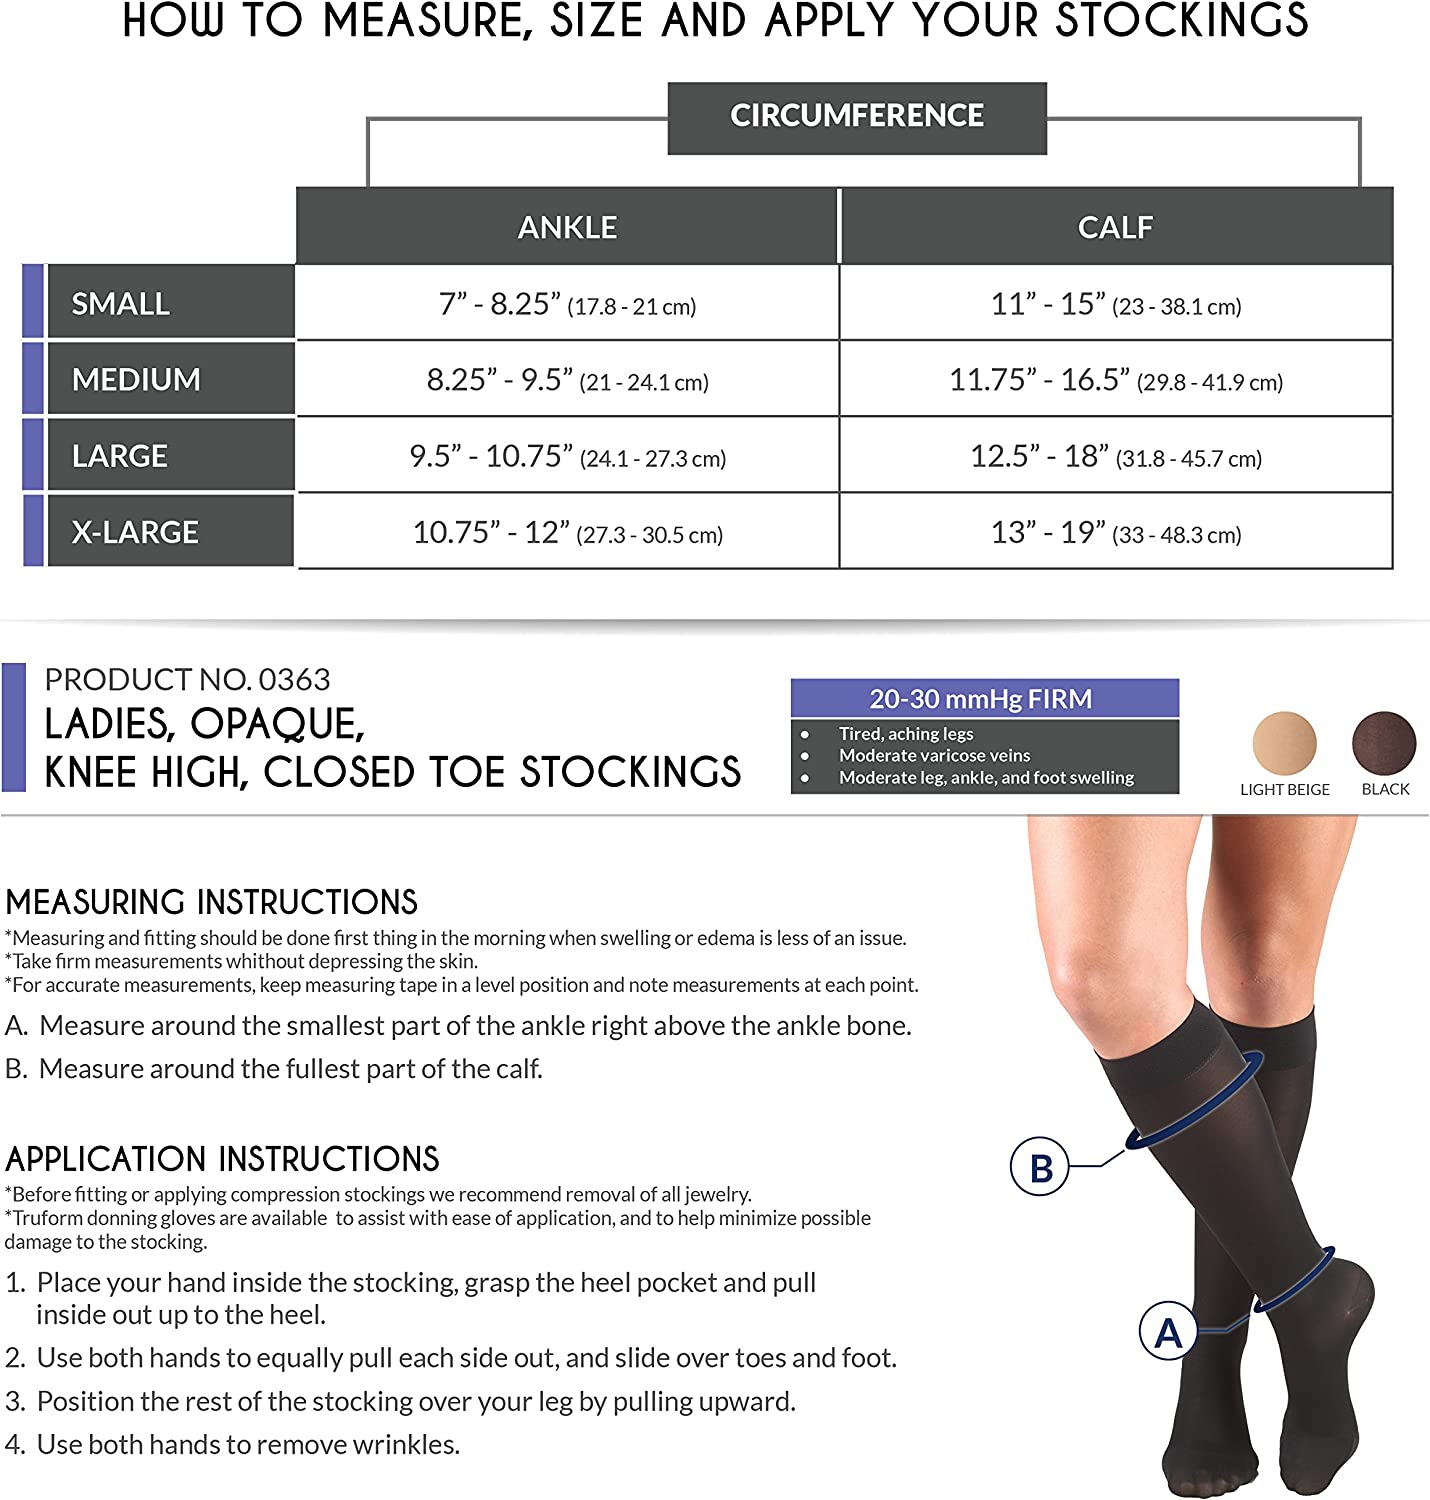 Truform Women's Stockings, Knee High, Closed Toe: 20-30 mmHg, Black, Medium 0363 - Midwest DME Supply